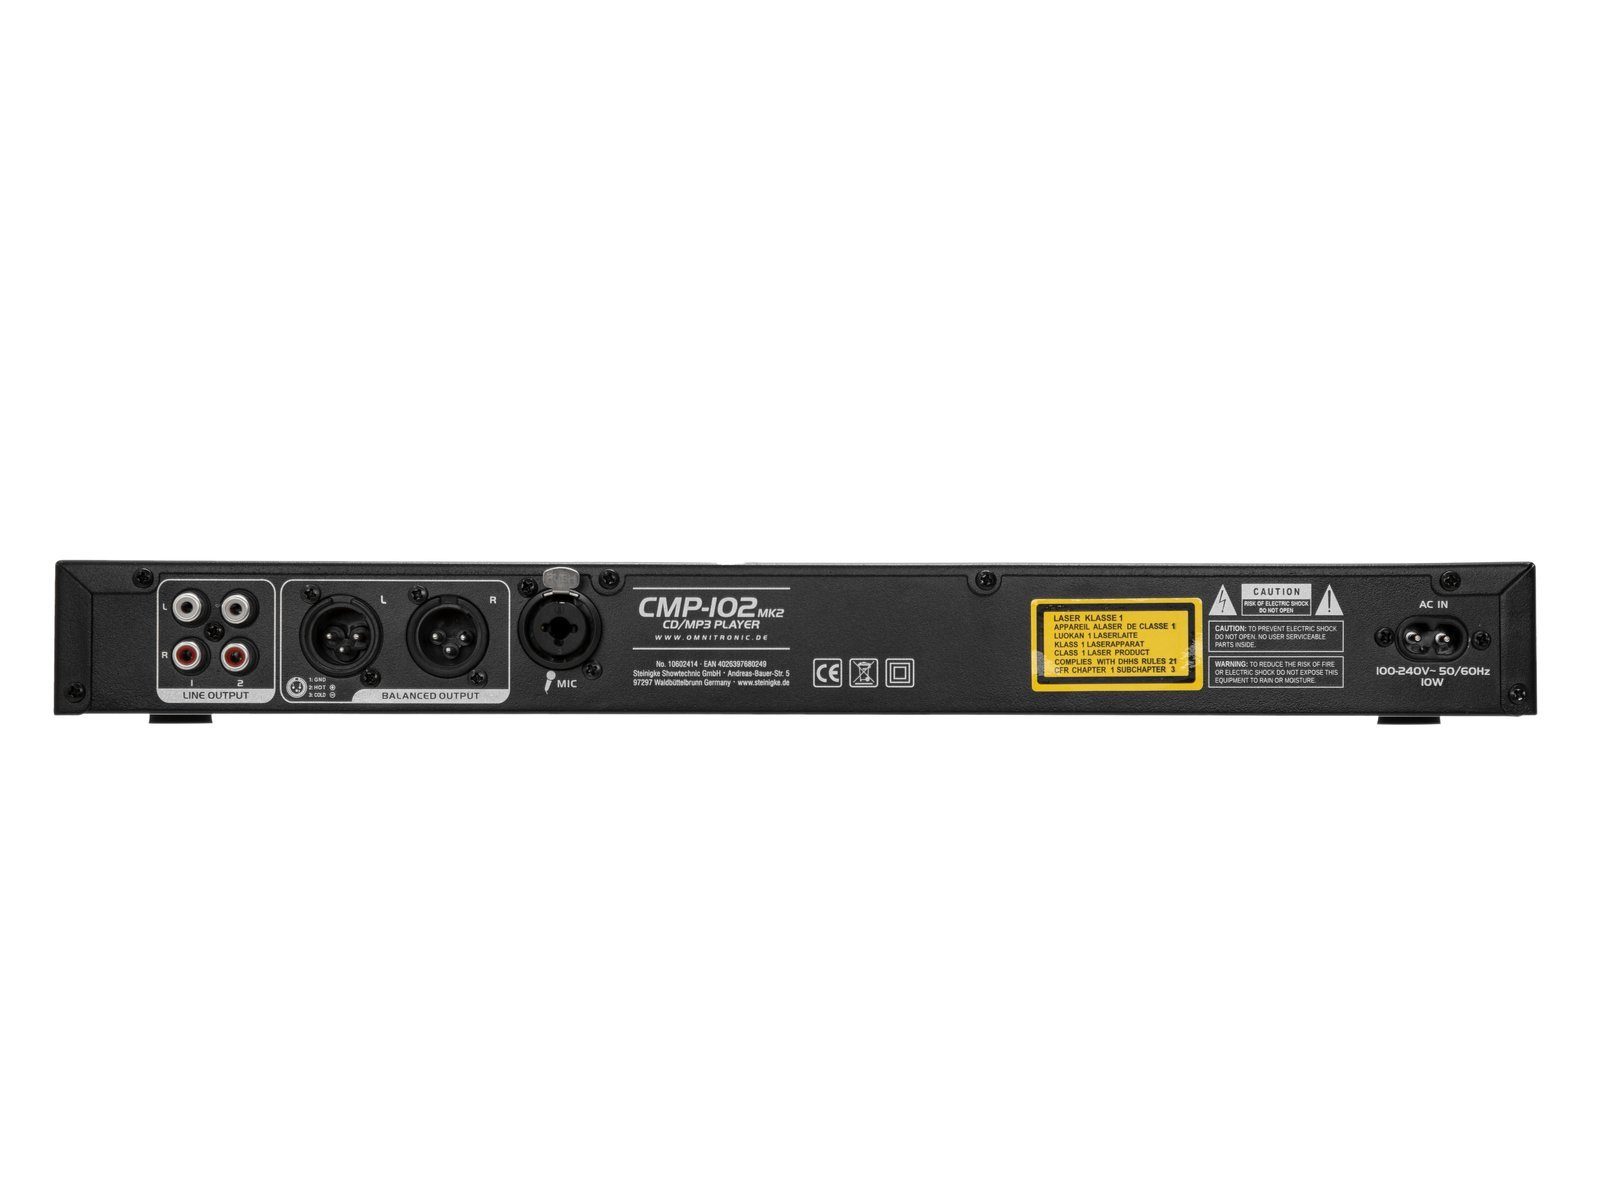 Omnitronic CMP-102 MK2 (1 HE Stereo-CD CD-/MP3-Player Einbauversion) Player